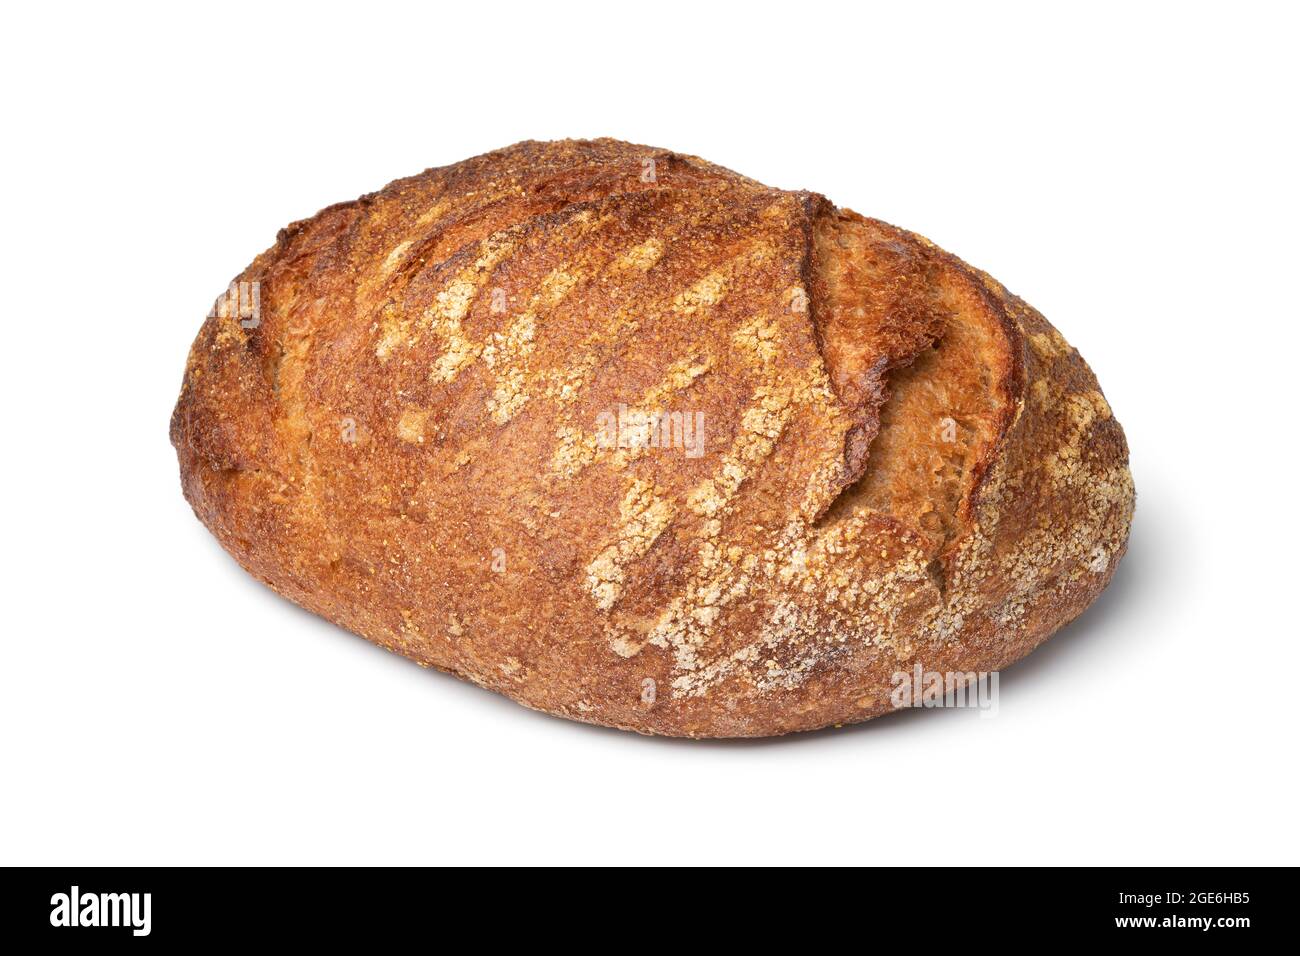 Single whole fresh baked German dinkel wheat bread isolated on white background Stock Photo